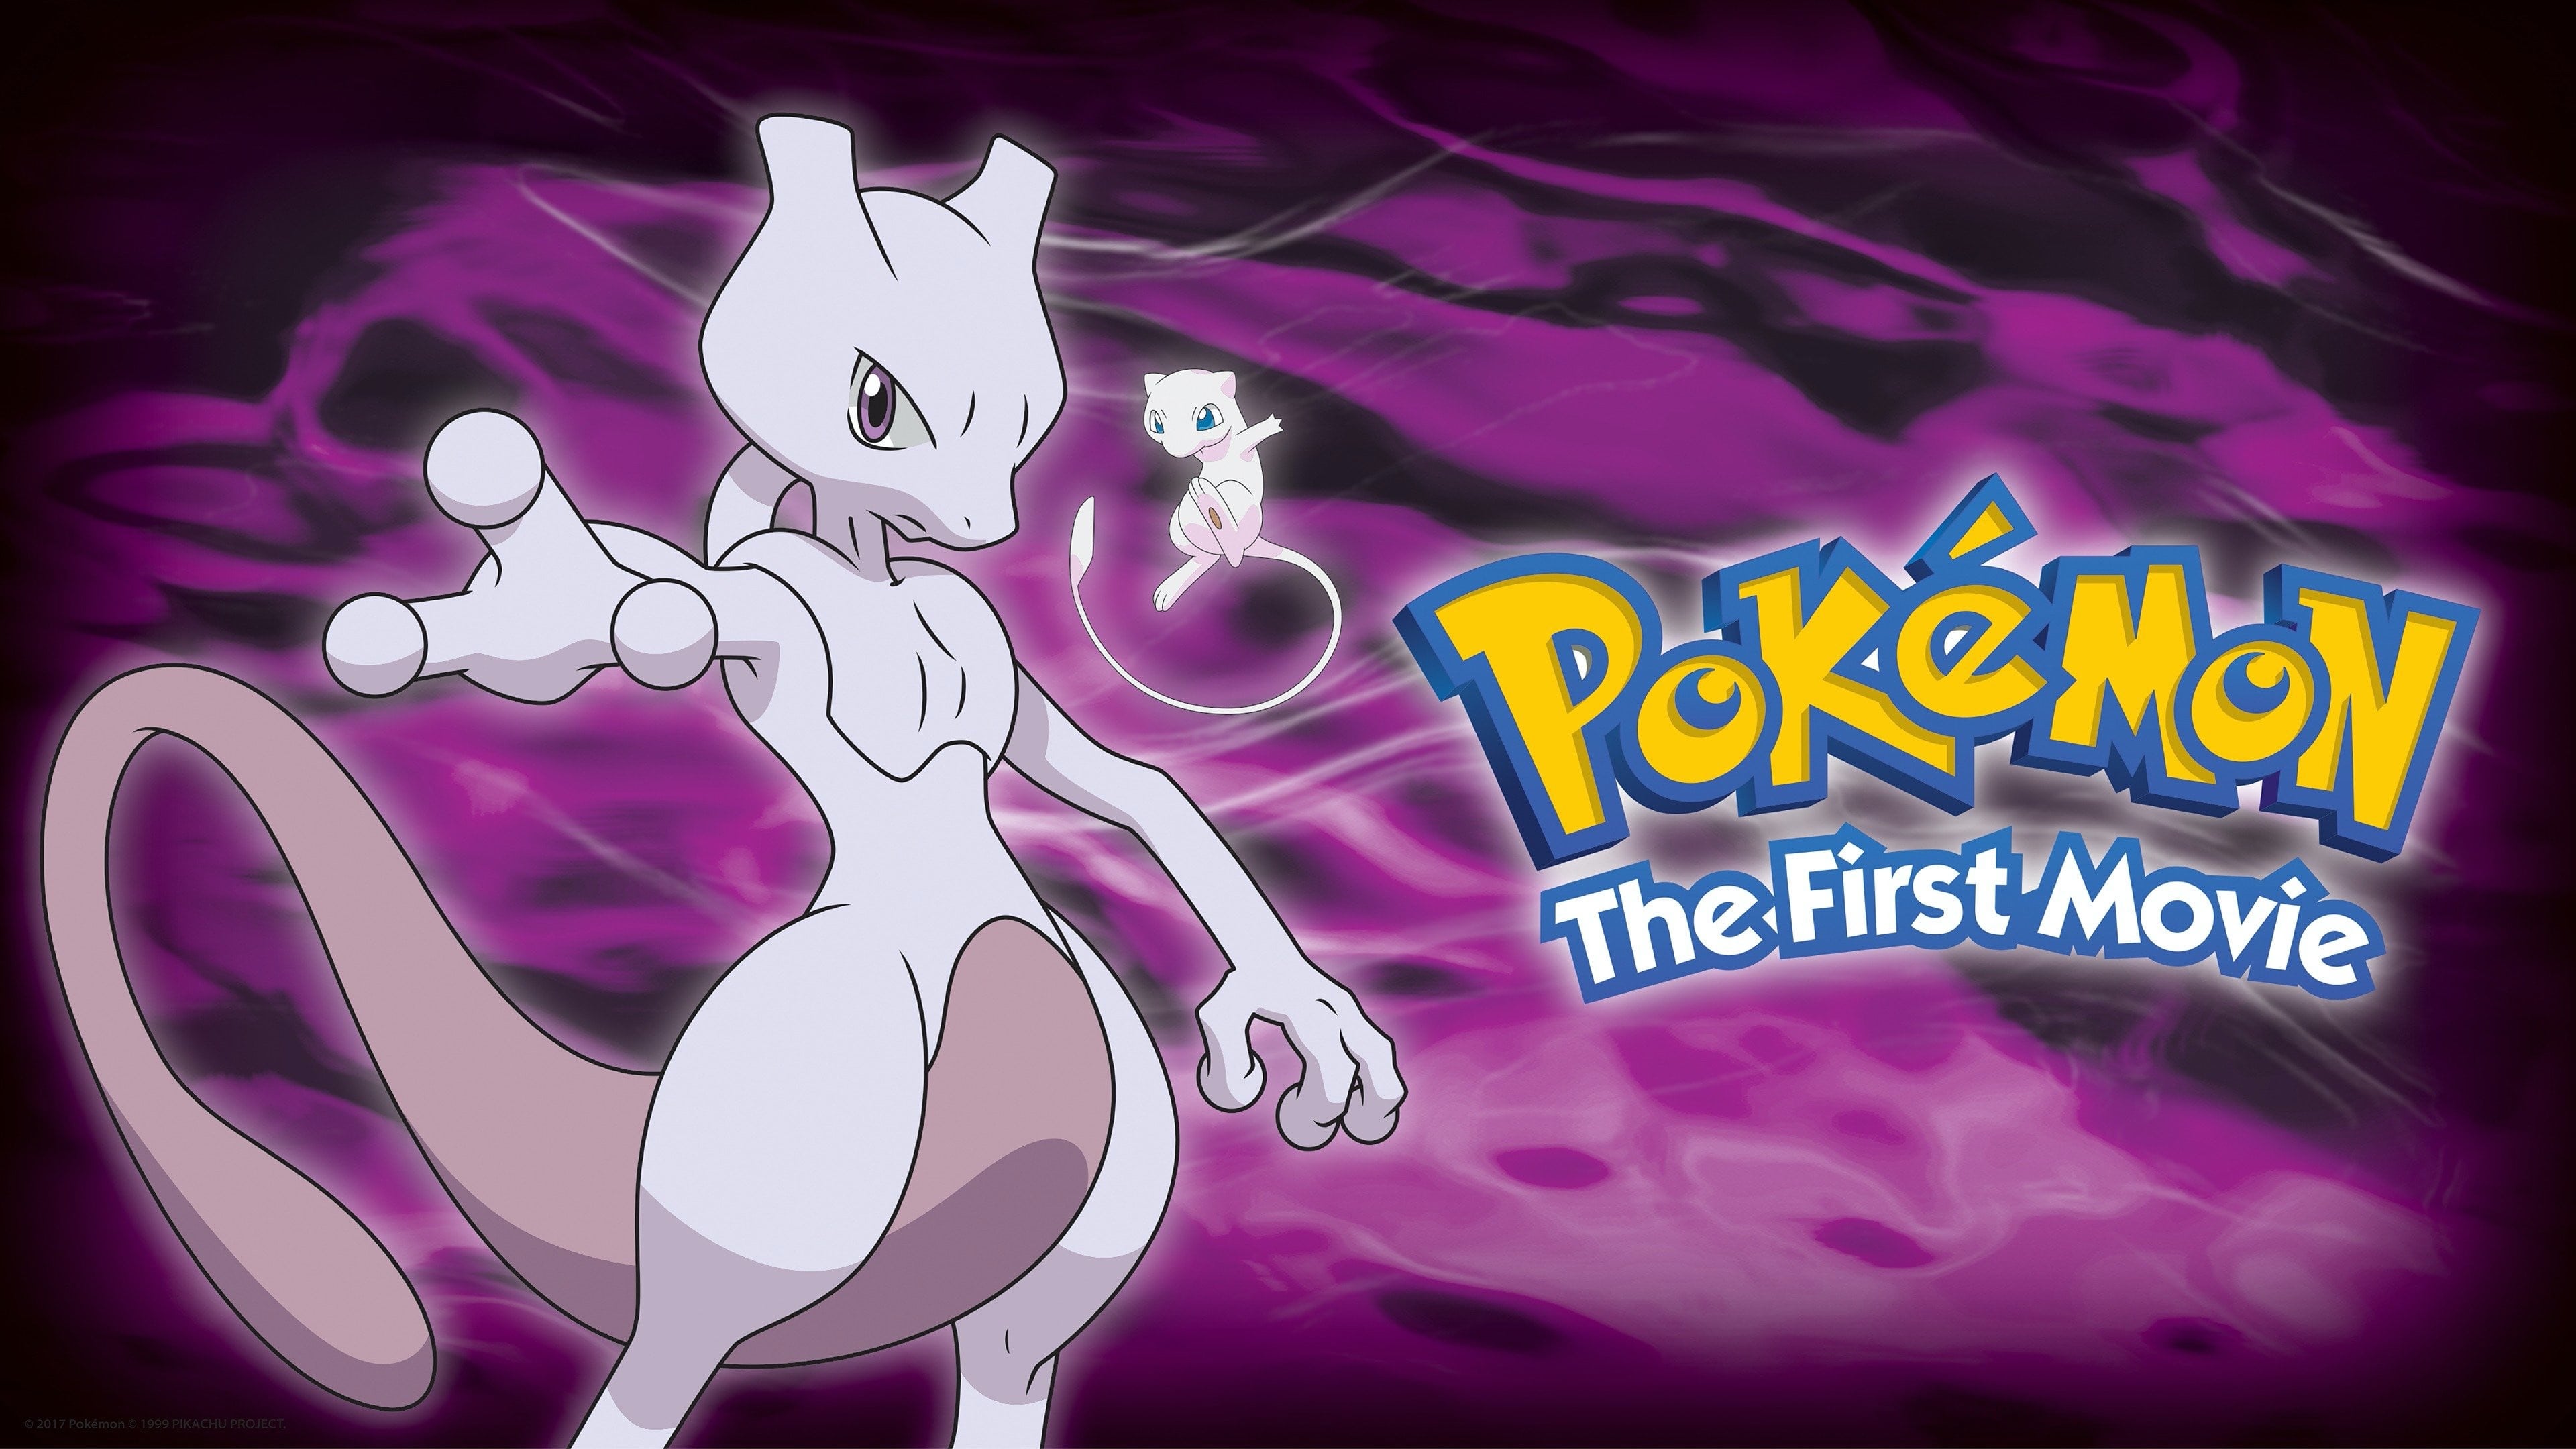 Pokémon: The First Movie – Mewtwo Strikes Back